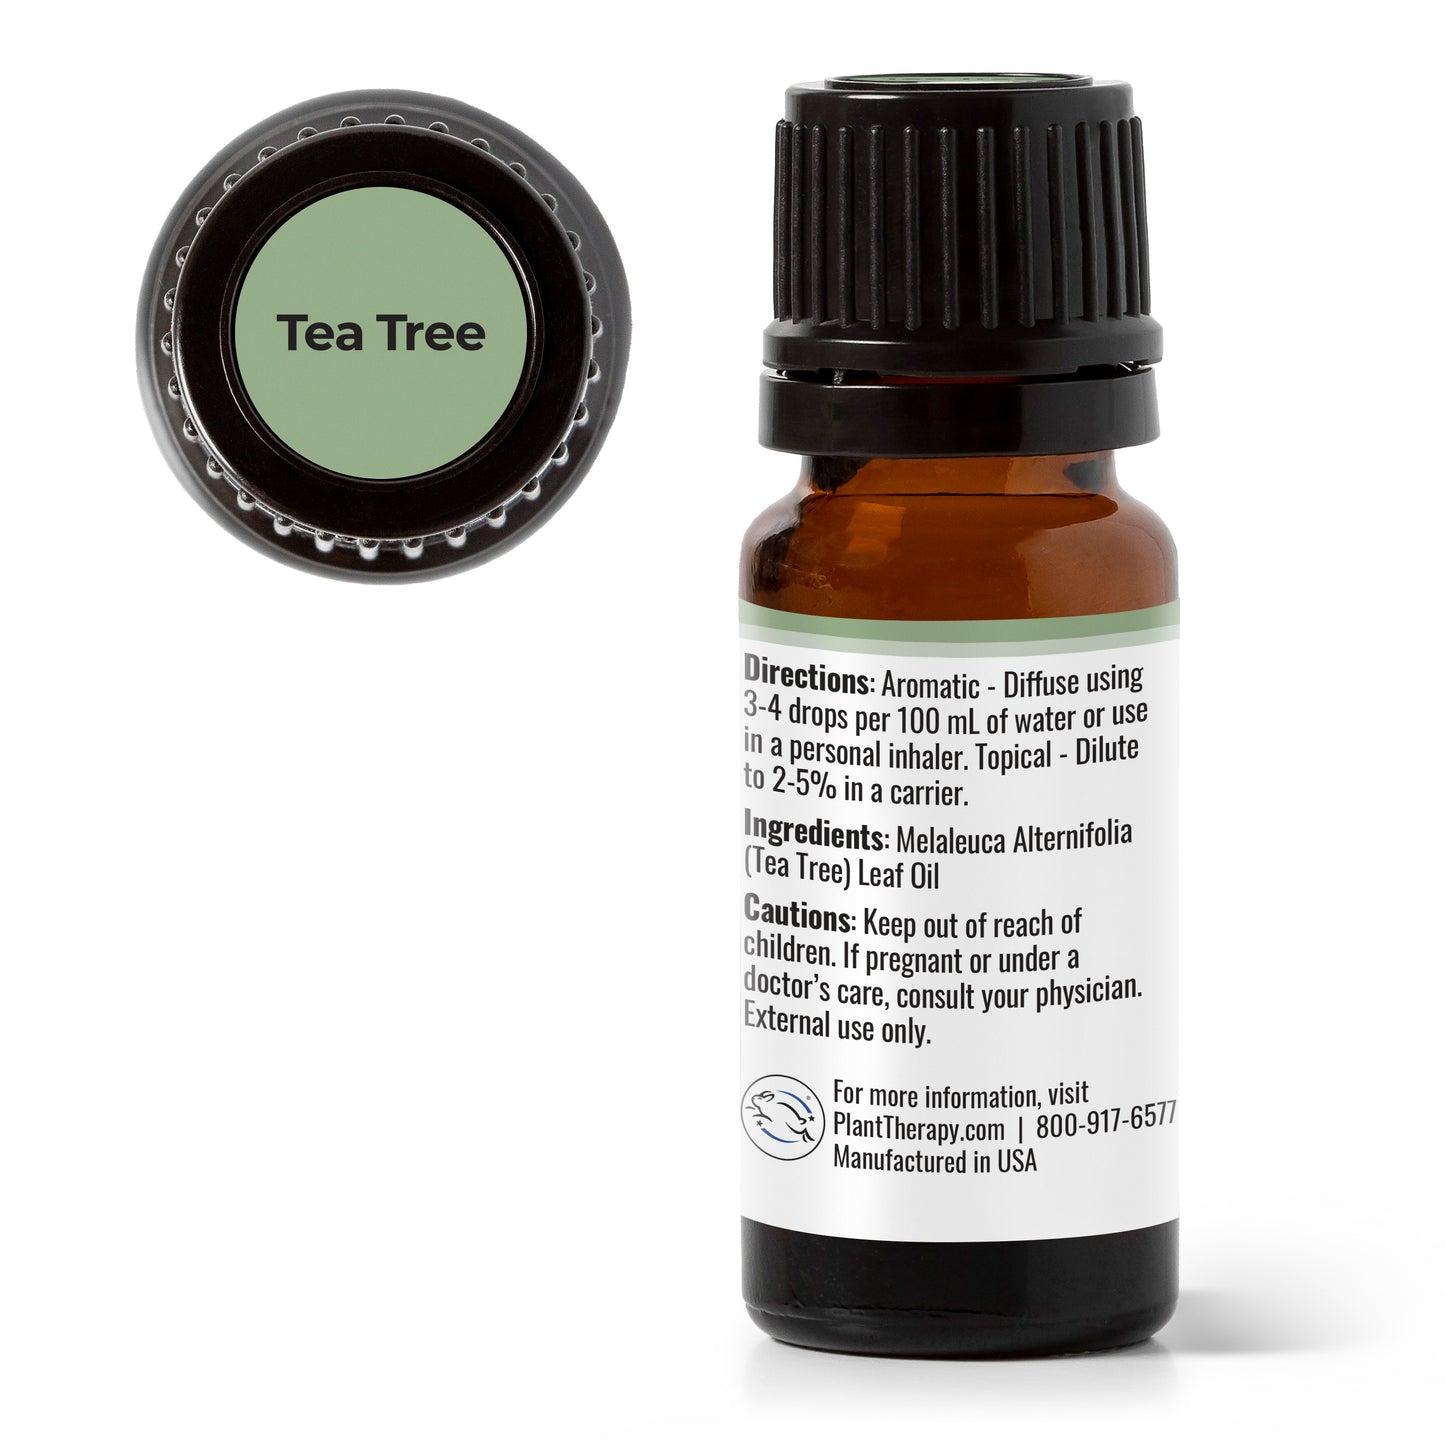 Tea Tree Essential Oil back label